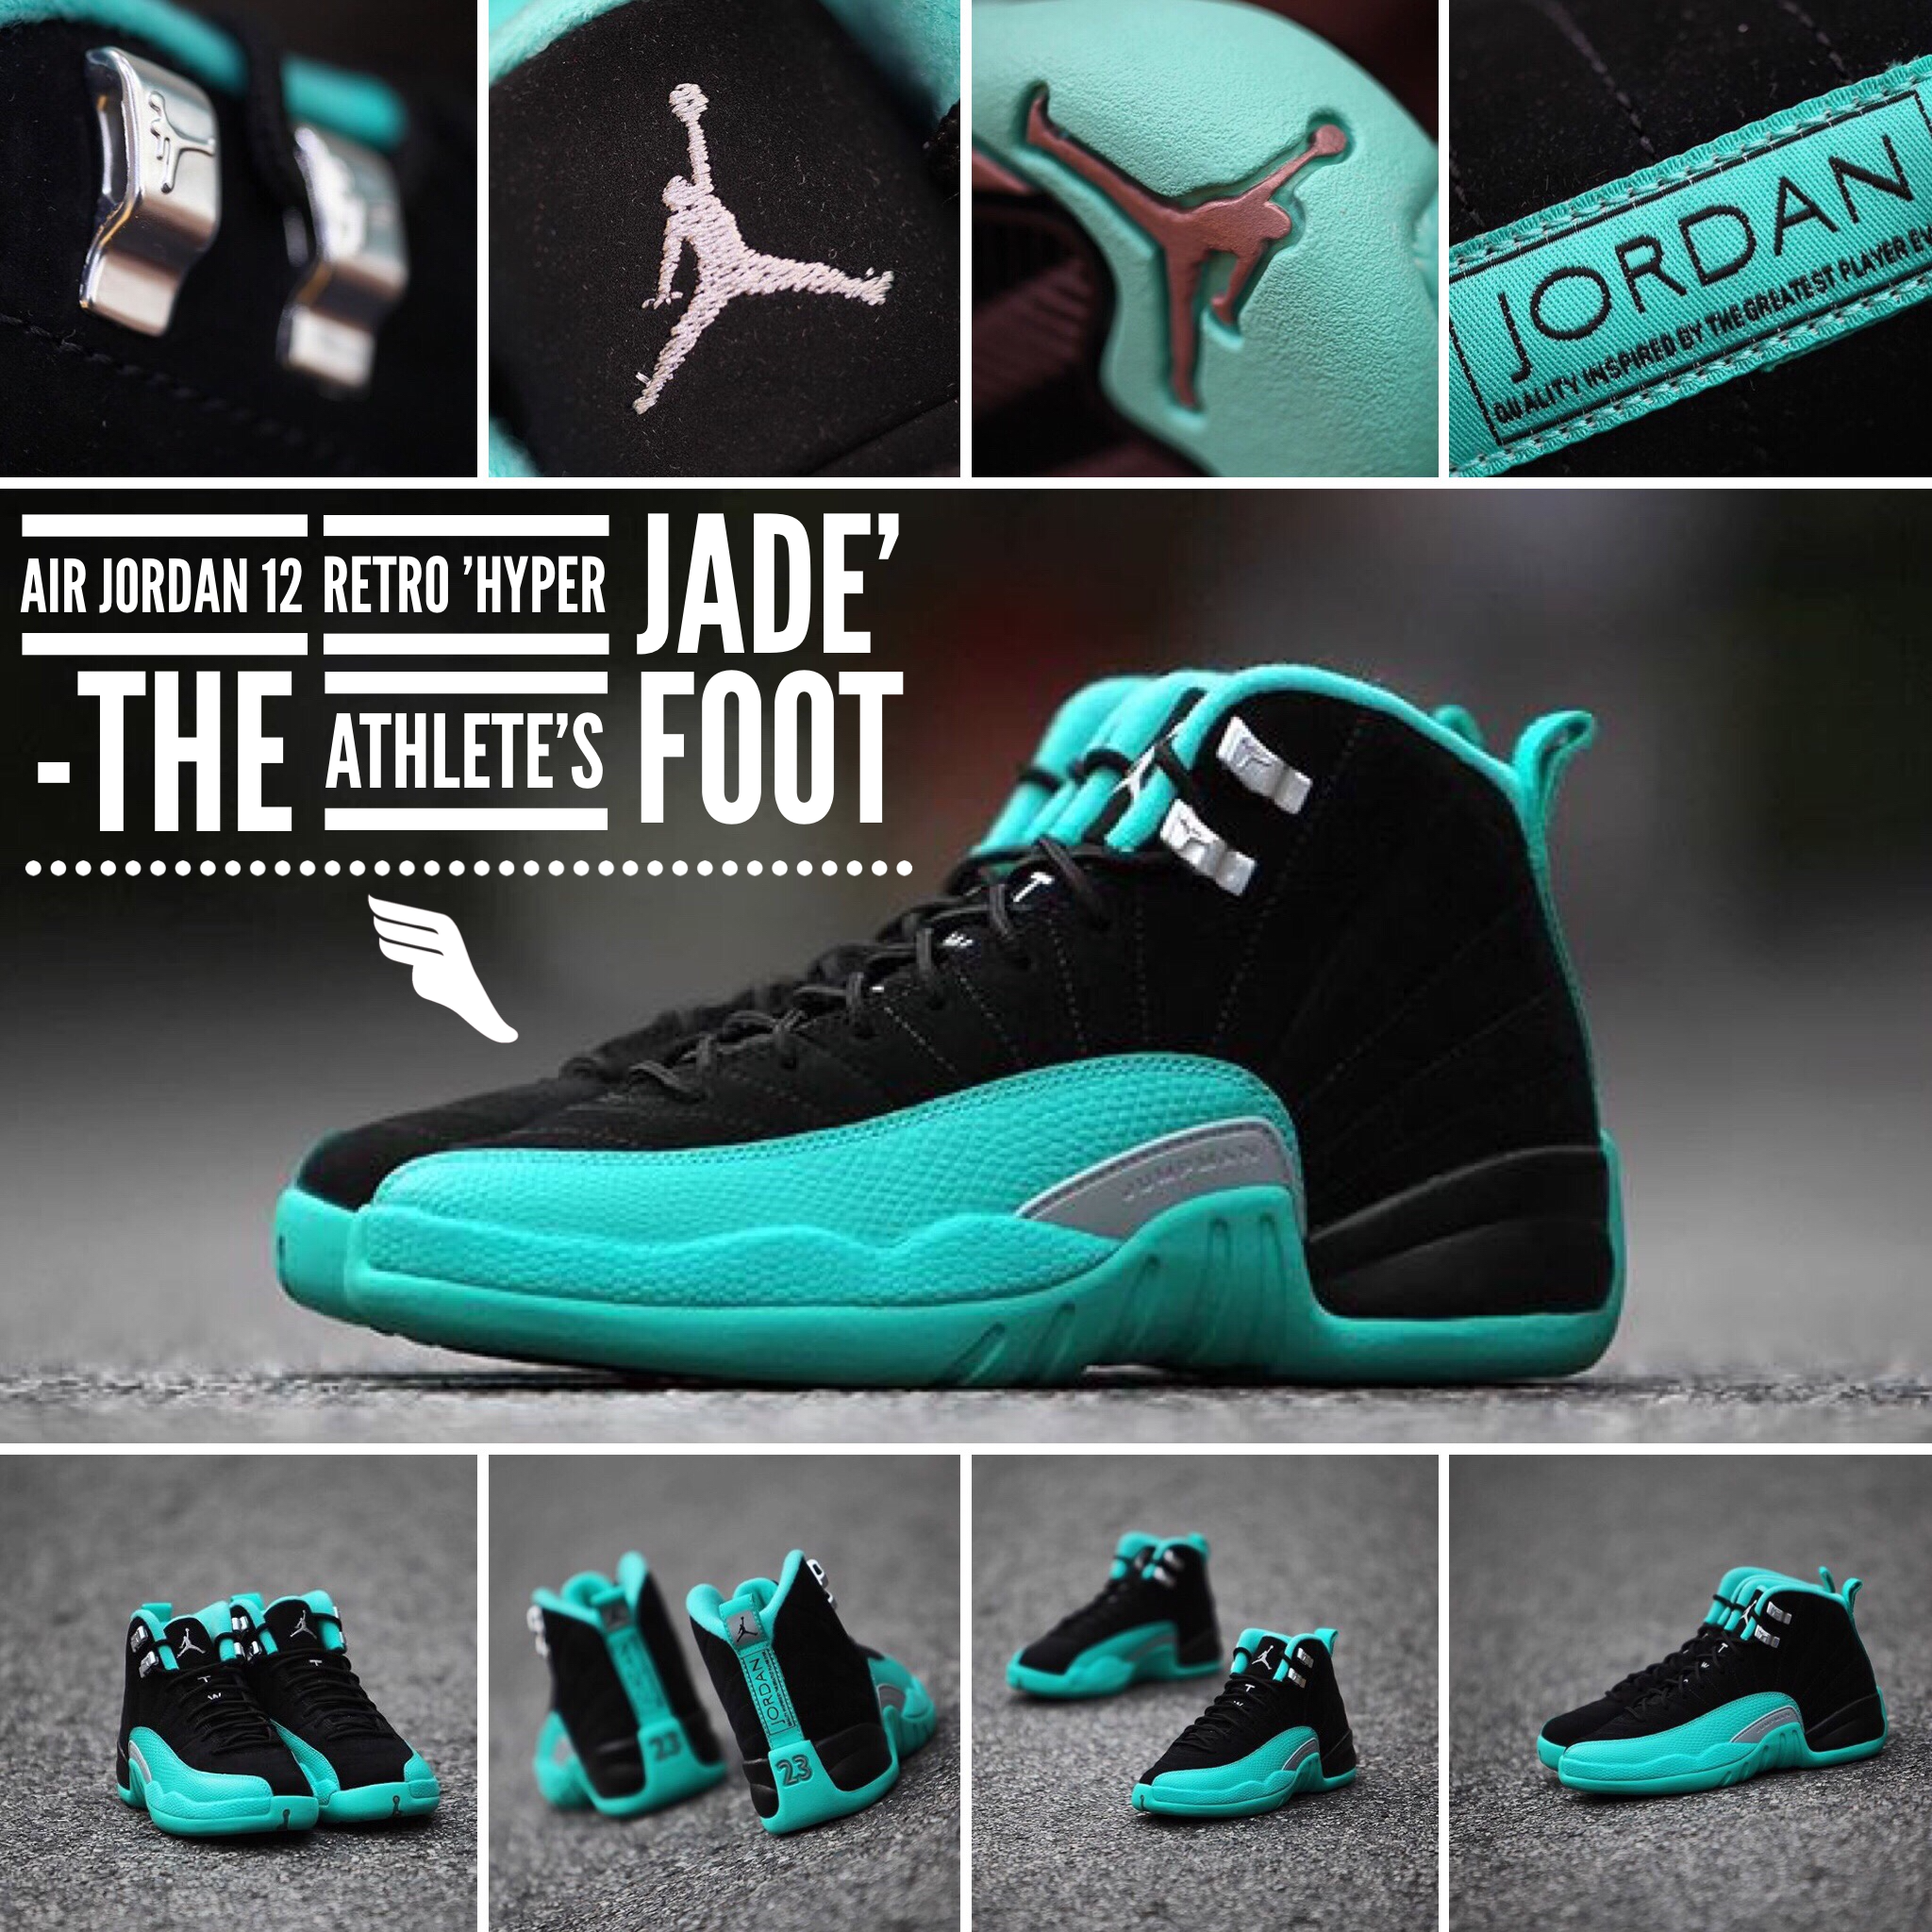 Air Jordan 12 Retro Hyper Jade l The Athlete's Foot